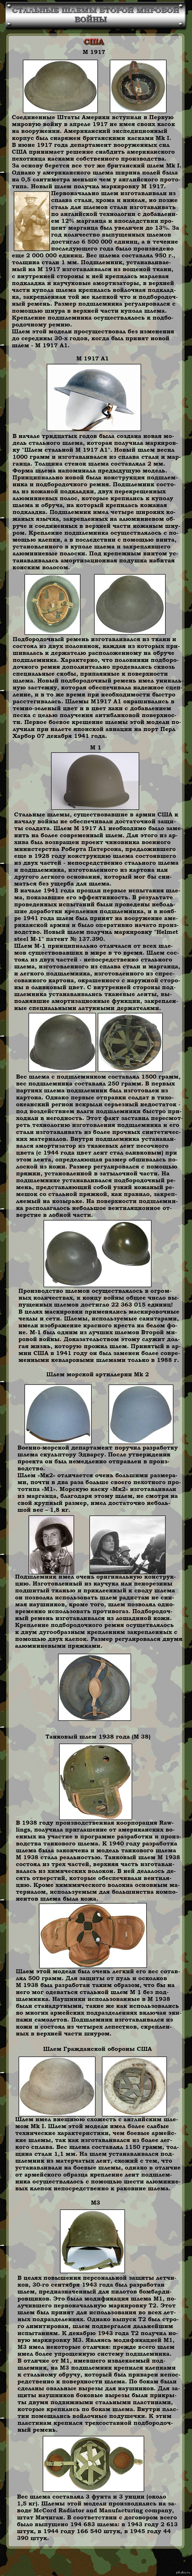 Helmets of the Second World War. - Longpost, Helmet, The Second World War